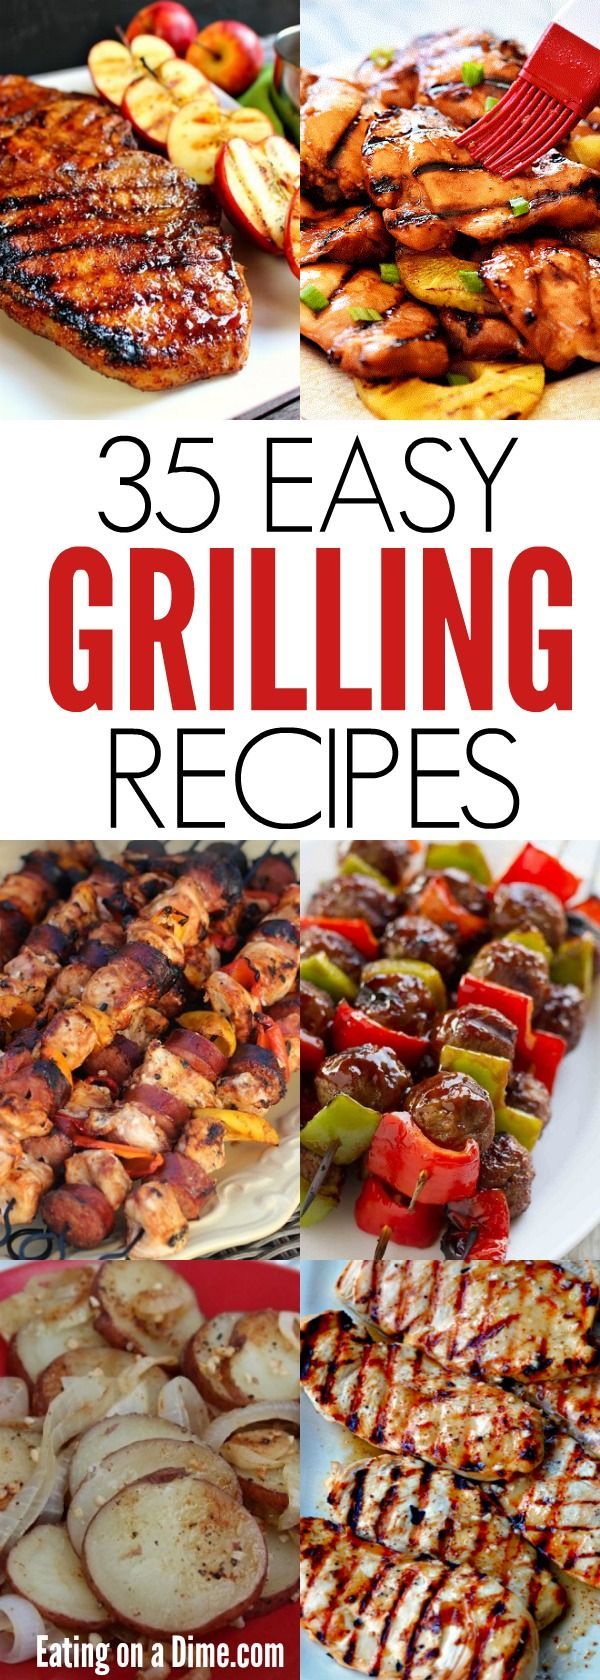 24 unique grilling recipes
 ideas